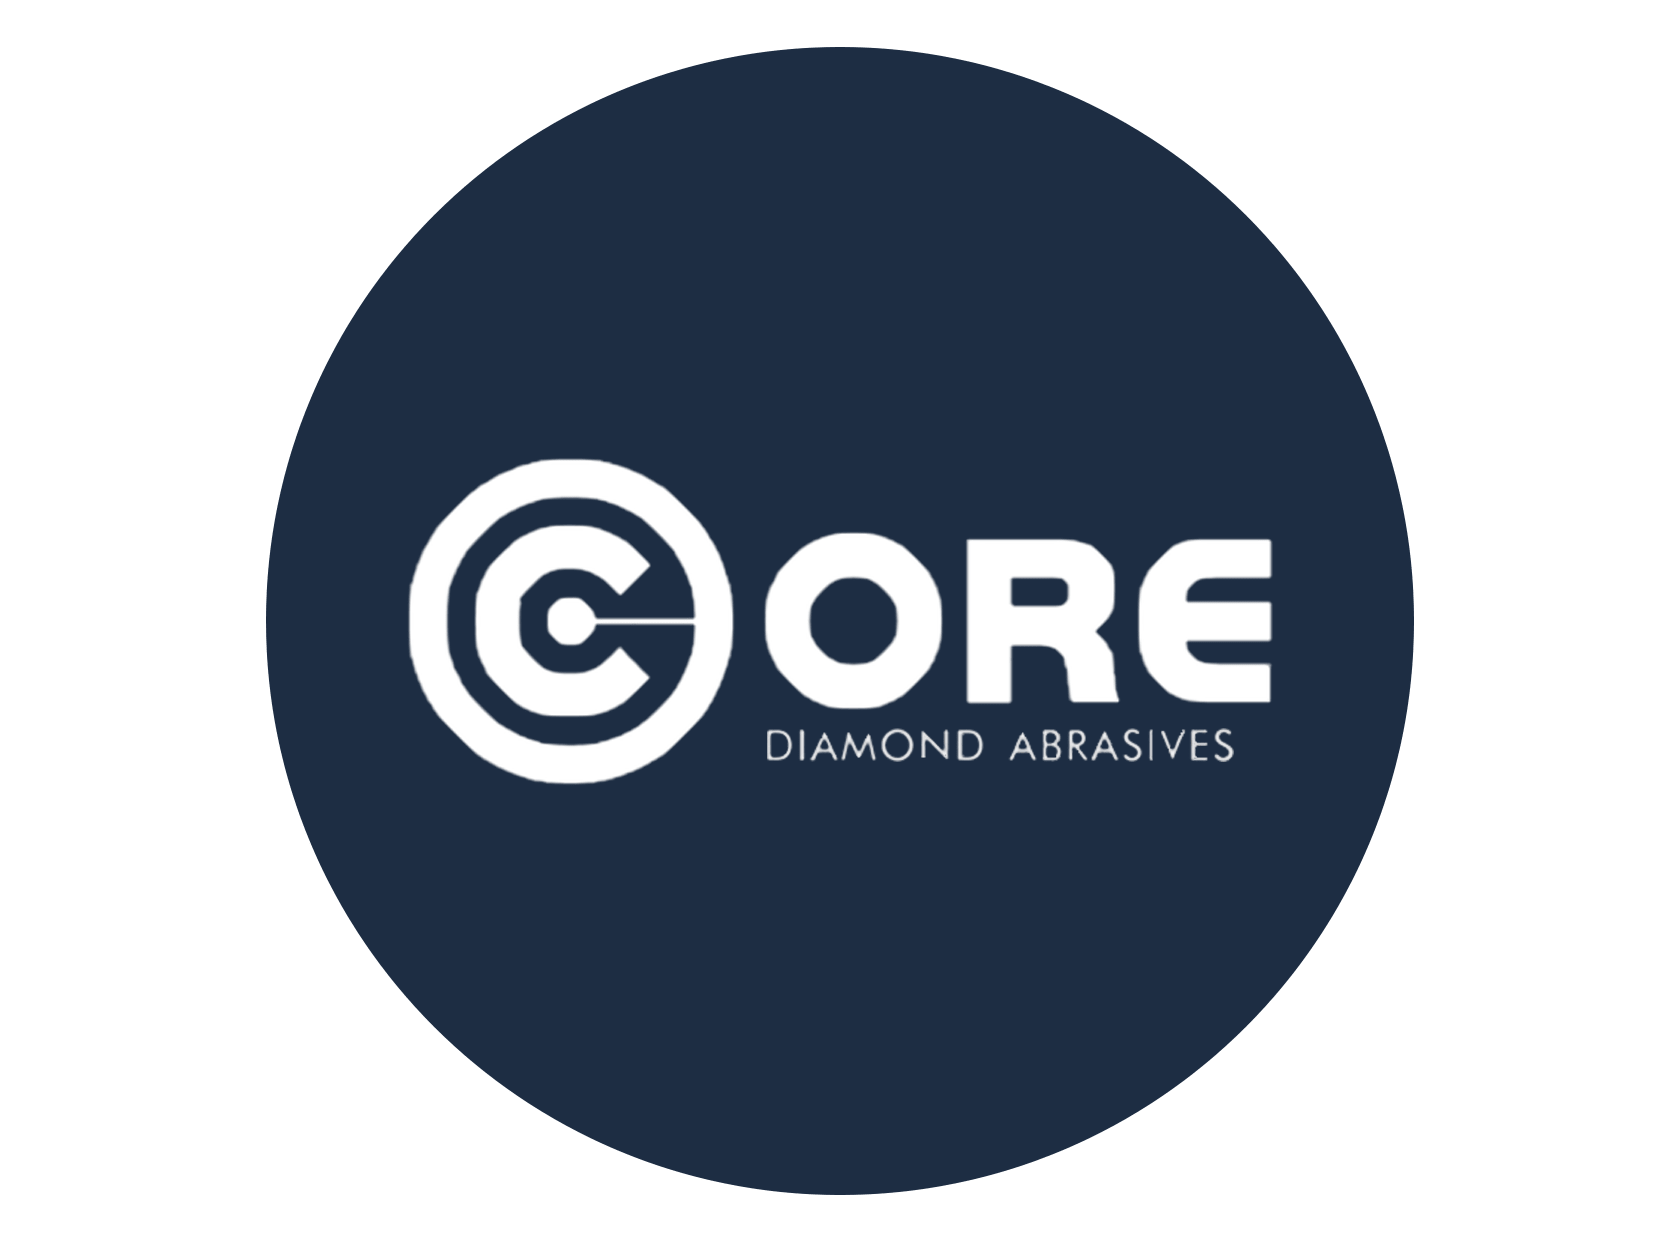 Core diamond abrasive logo for OOH ads